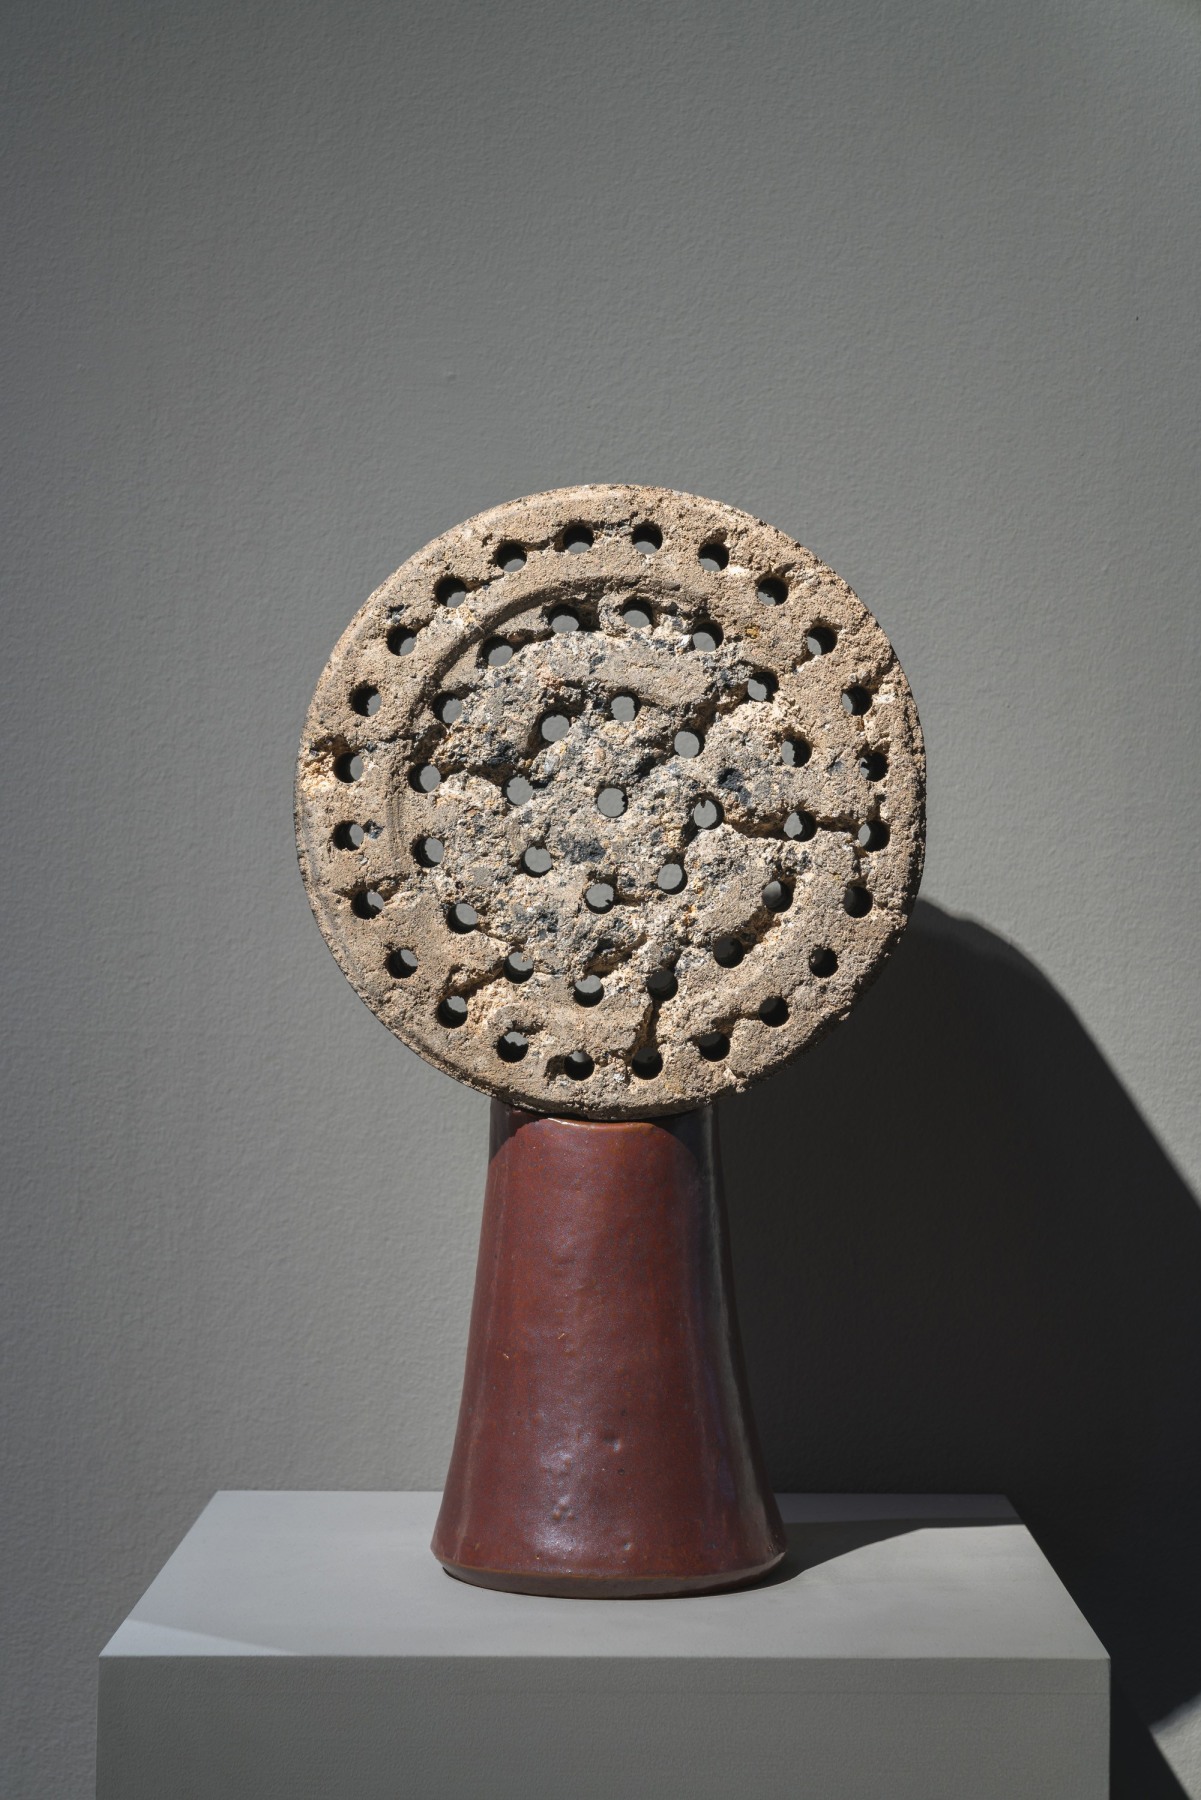 Seung-taek Lee

&amp;ldquo;Untitled&amp;rdquo;, 1965/2020

Briquette, earthenware

20 3/4 x 11 3/4 x 6 3/4 inches

53 x 30 x 17 cm

LEE 4